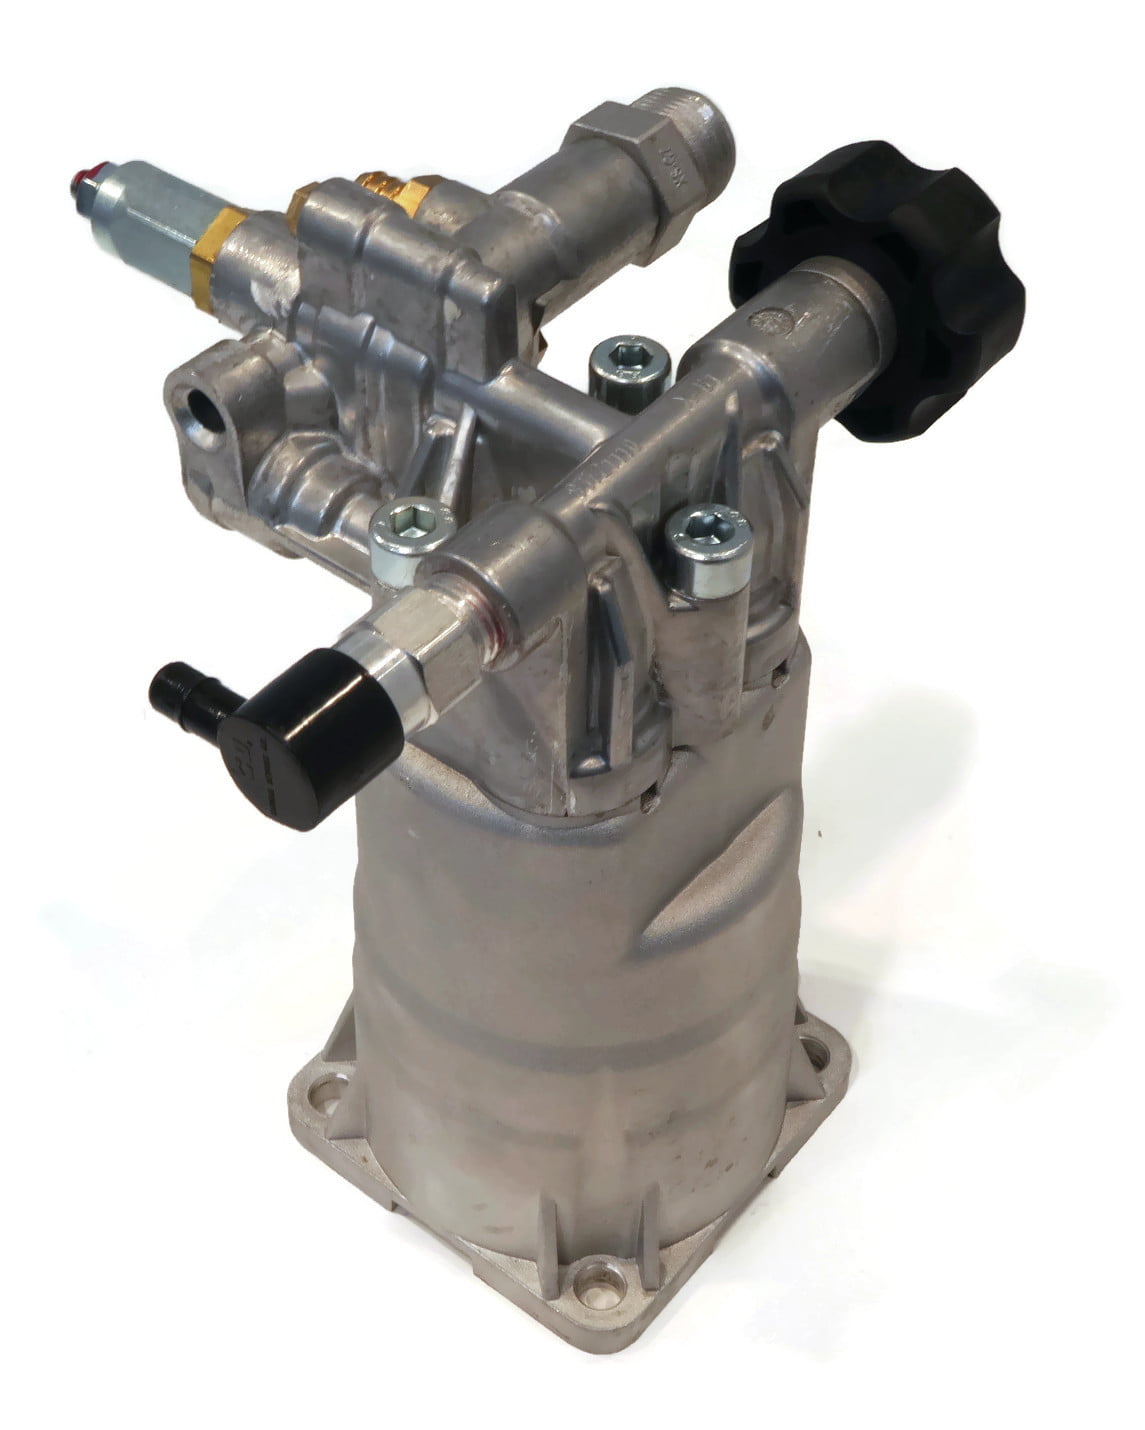 Power Pressure Washer Pump has Aluminum Head for Simoniz 039-8699 Engine Sprayer 